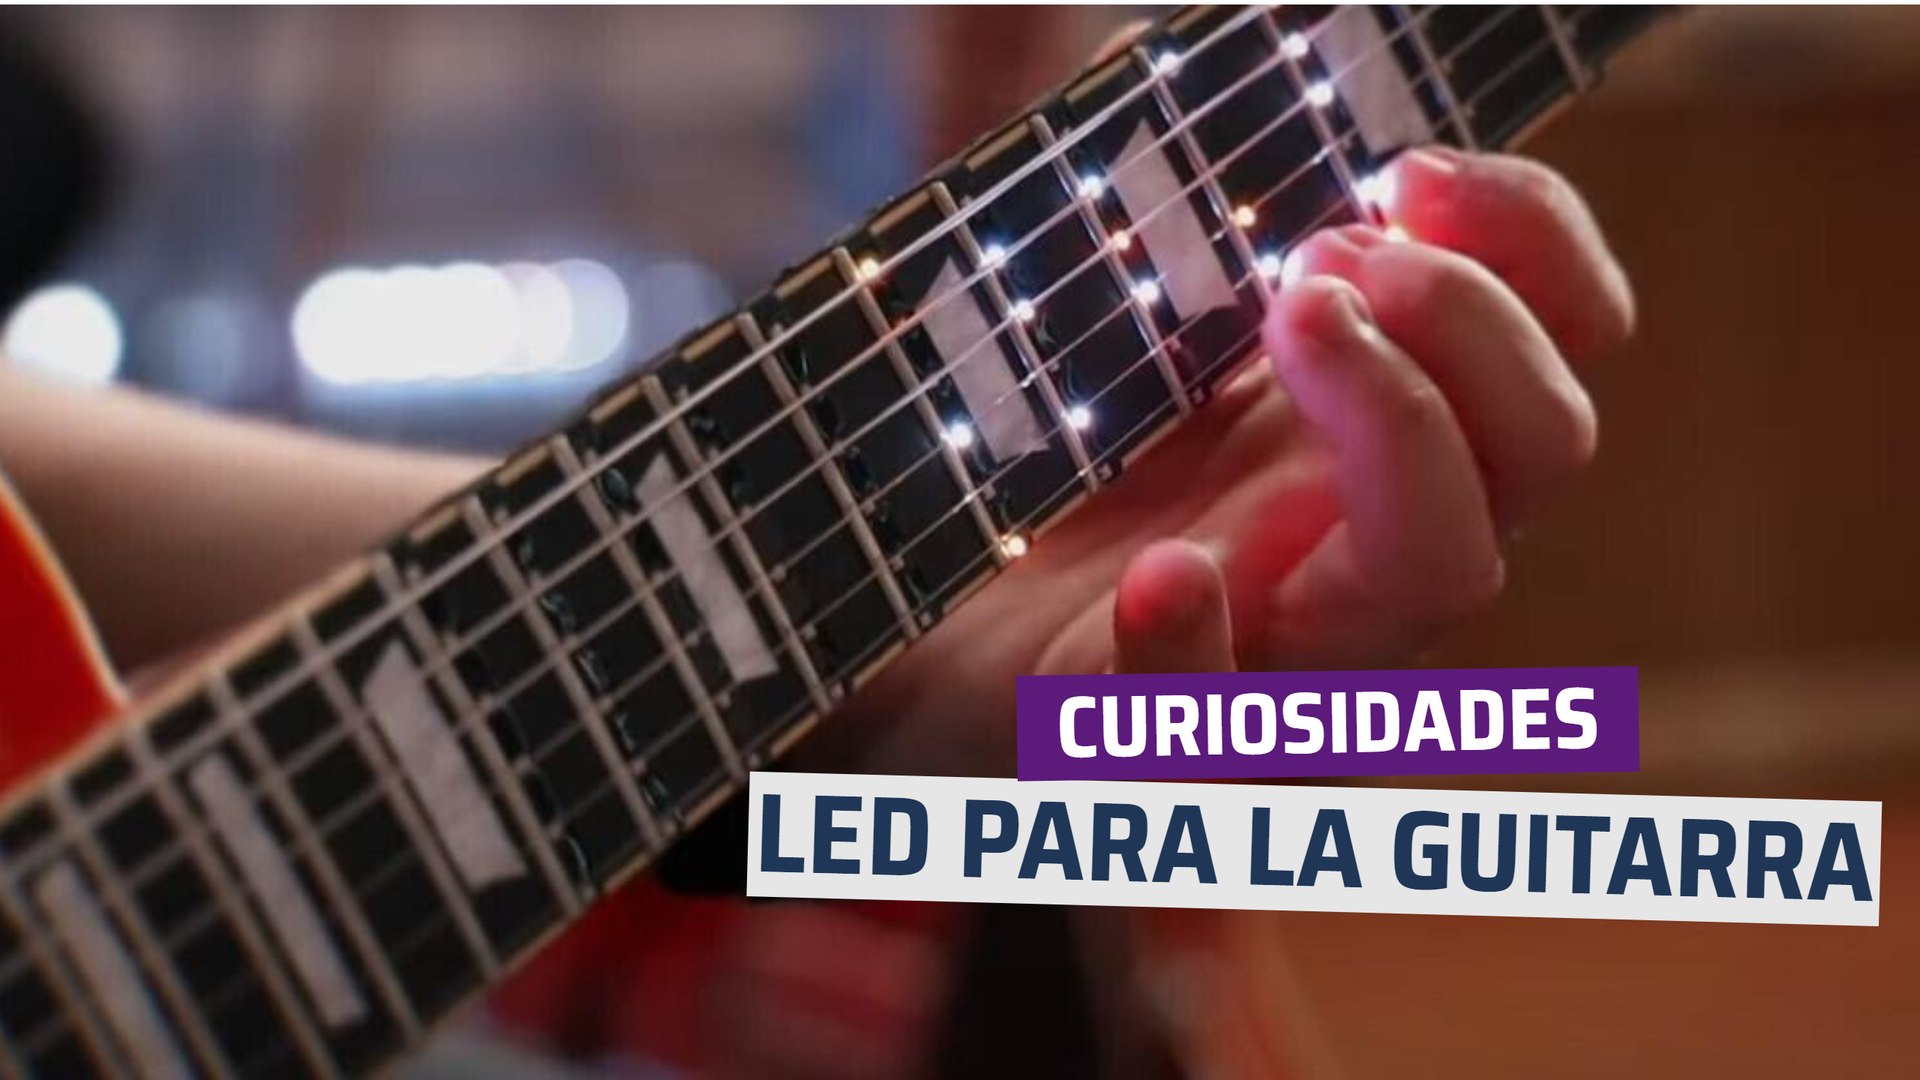 LED para aprender a tocar la guitarra - Vídeo Dailymotion